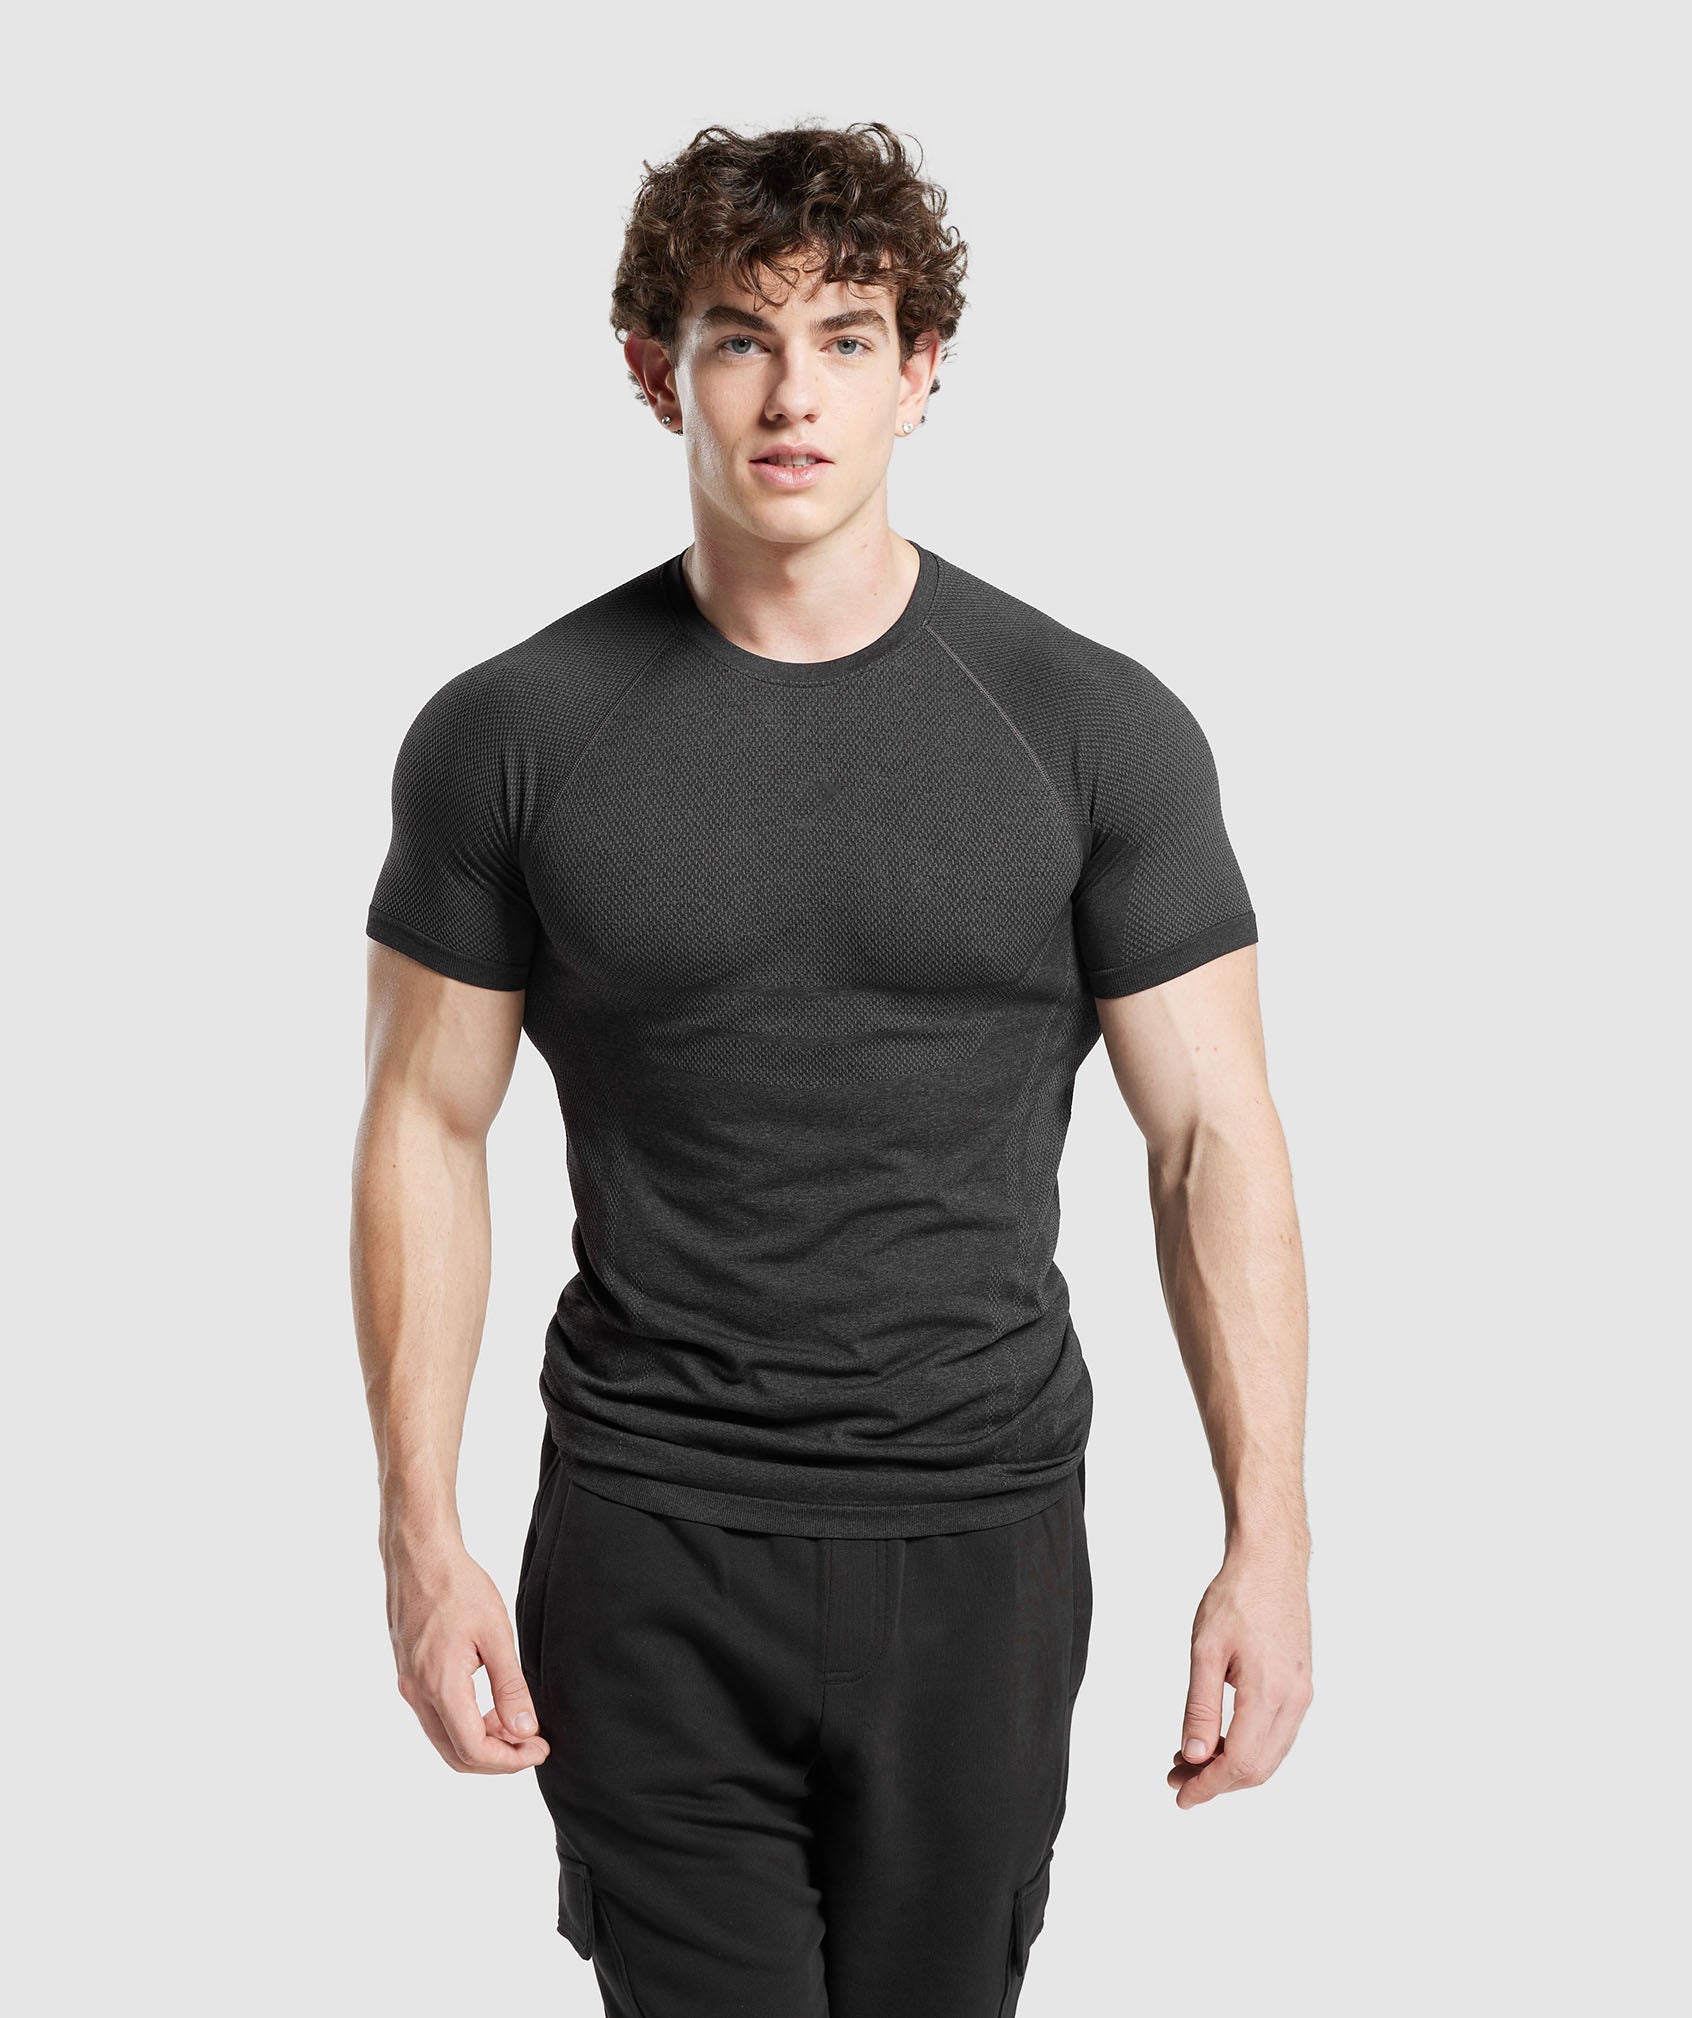 Elite Seamless T-Shirt in Black/Dark Grey